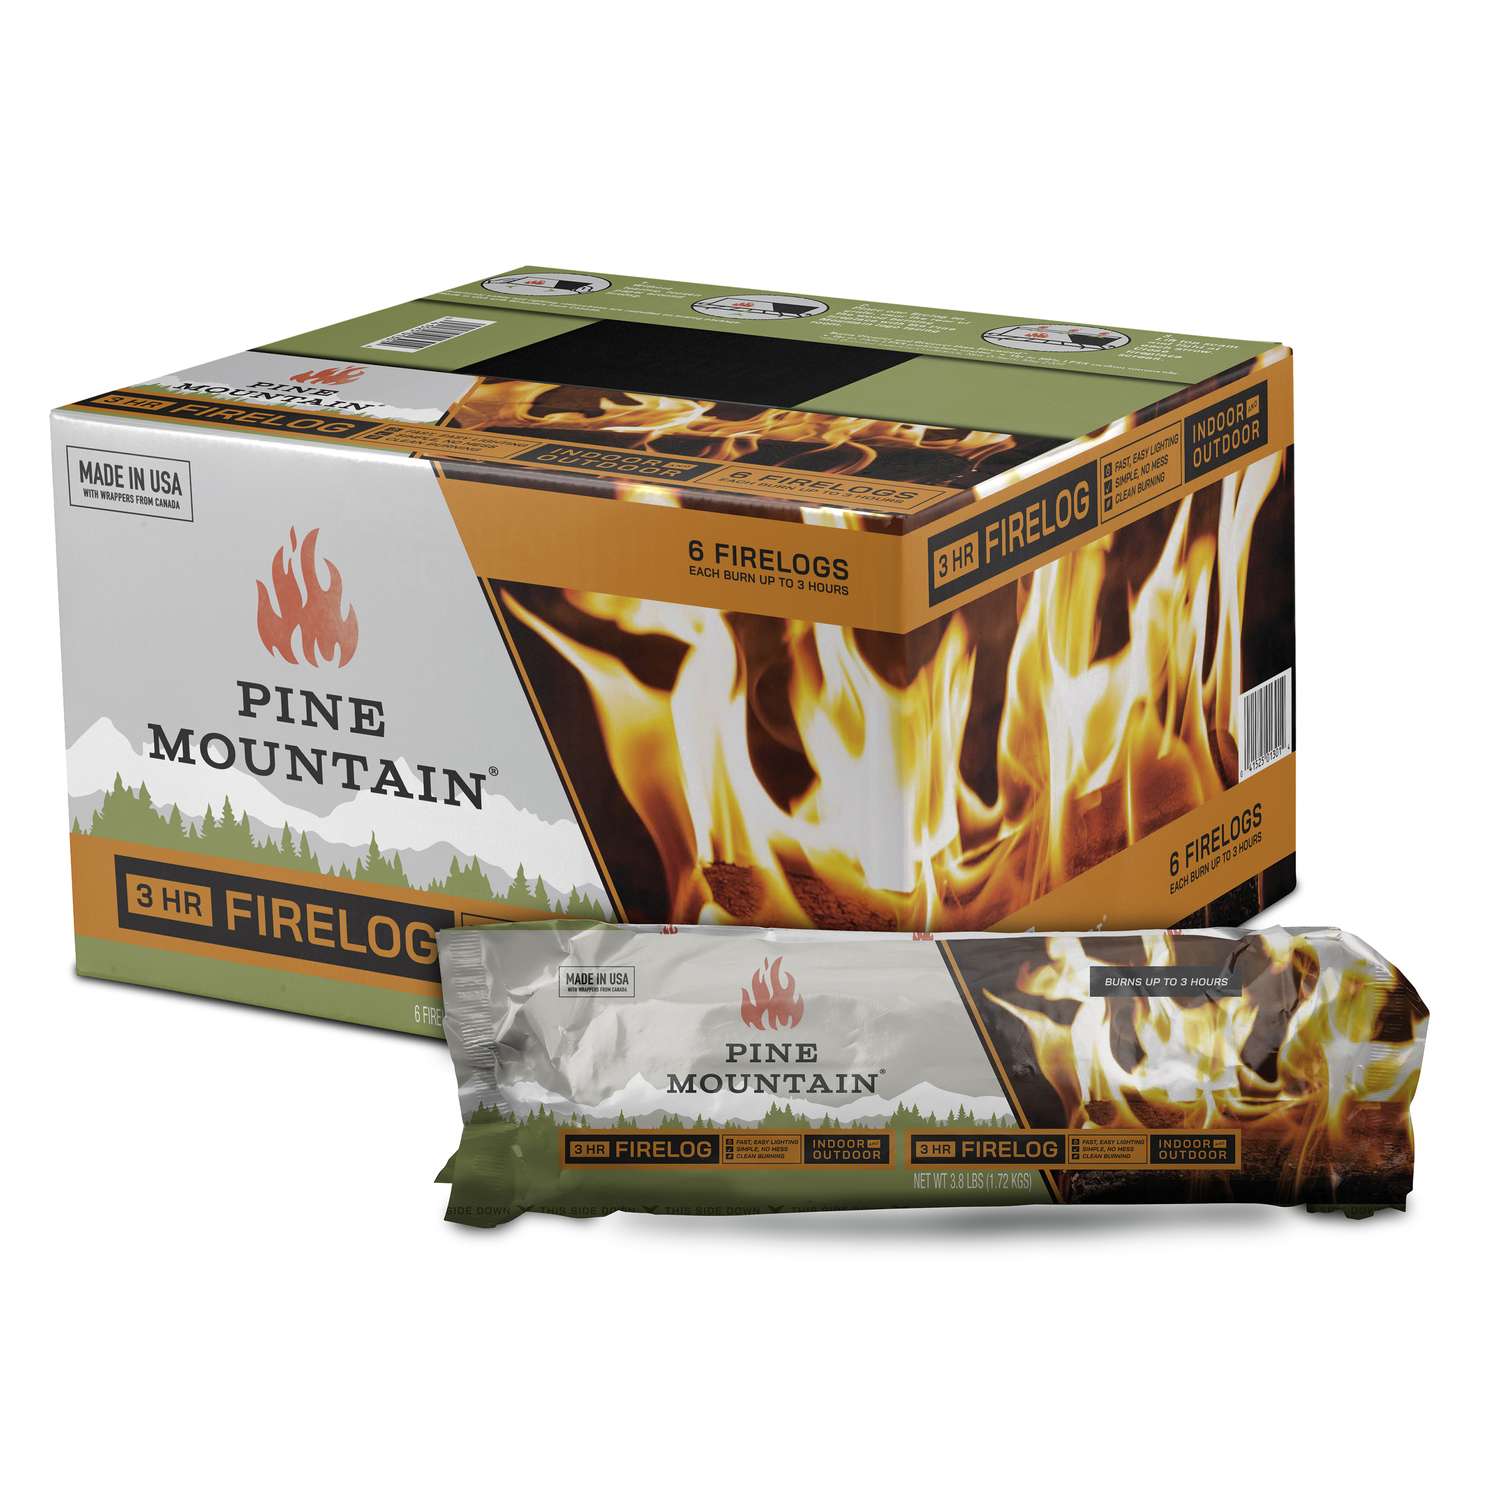 Pine Mountain Fire Log 6 pk Ace Hardware